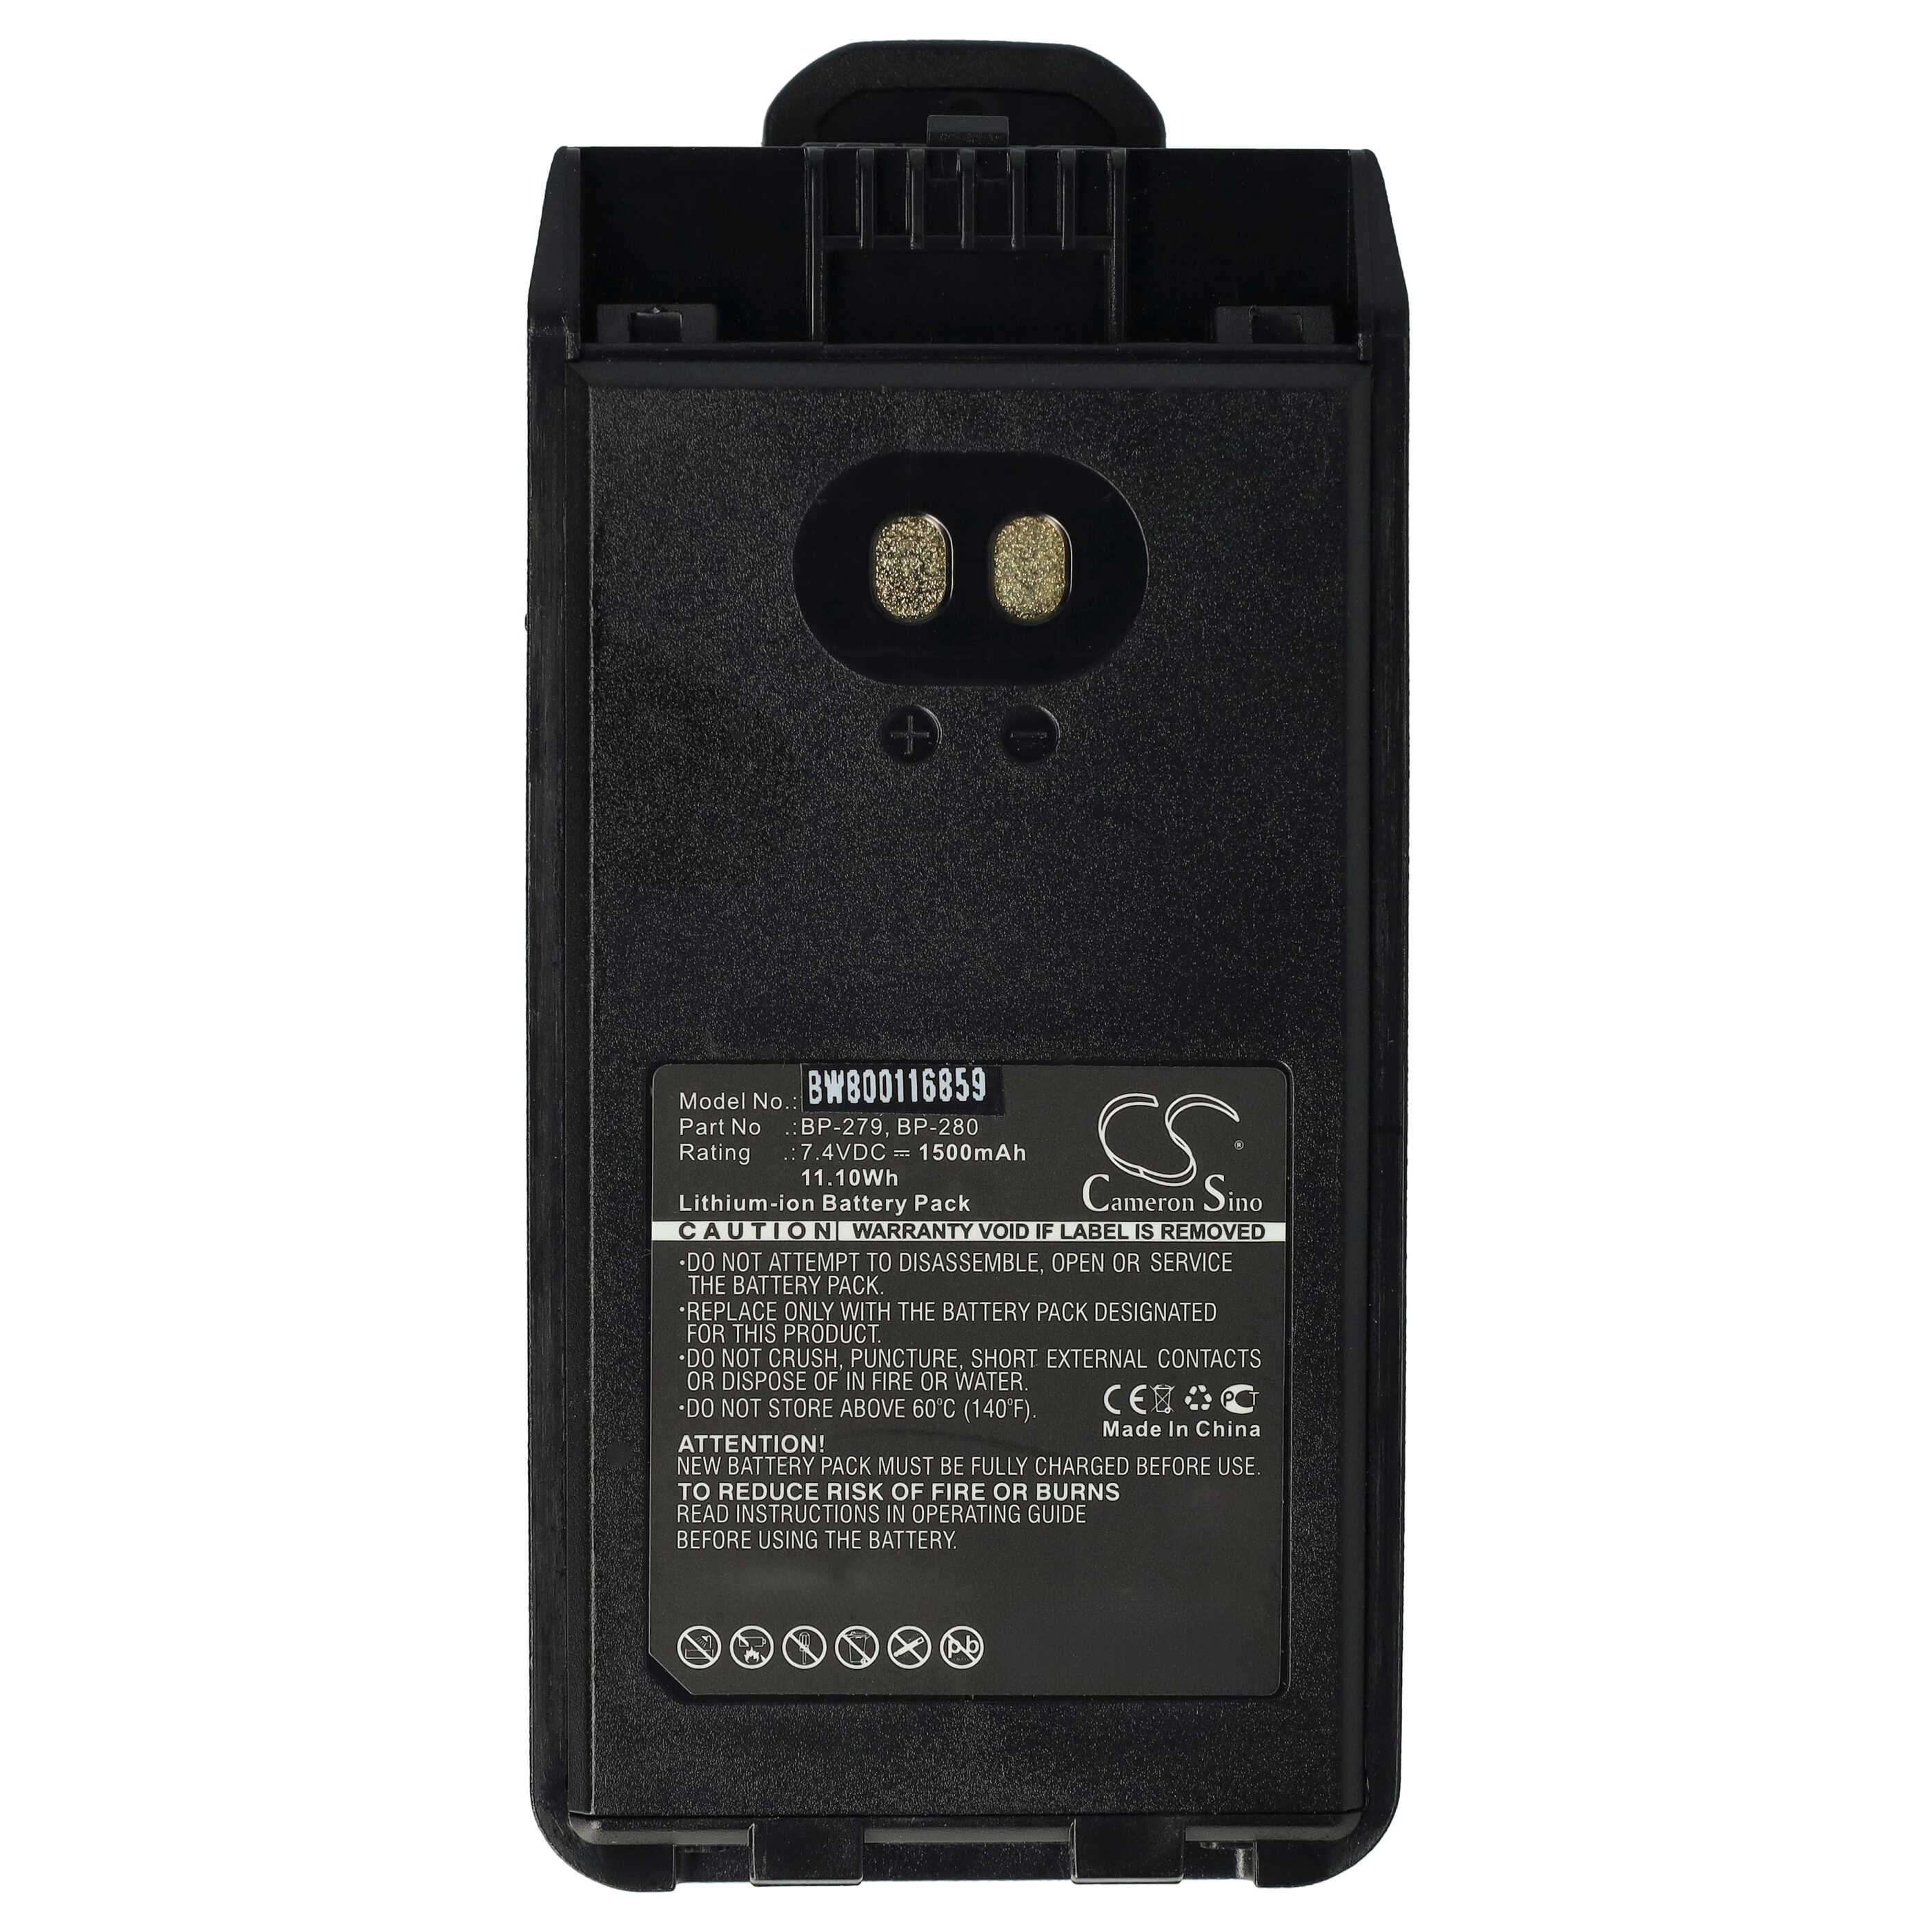 Batería reemplaza Icom BP-279, BP-280 para radio, walkie-talkie Icom - 1500 mAh 7,4 V Li-Ion con clip